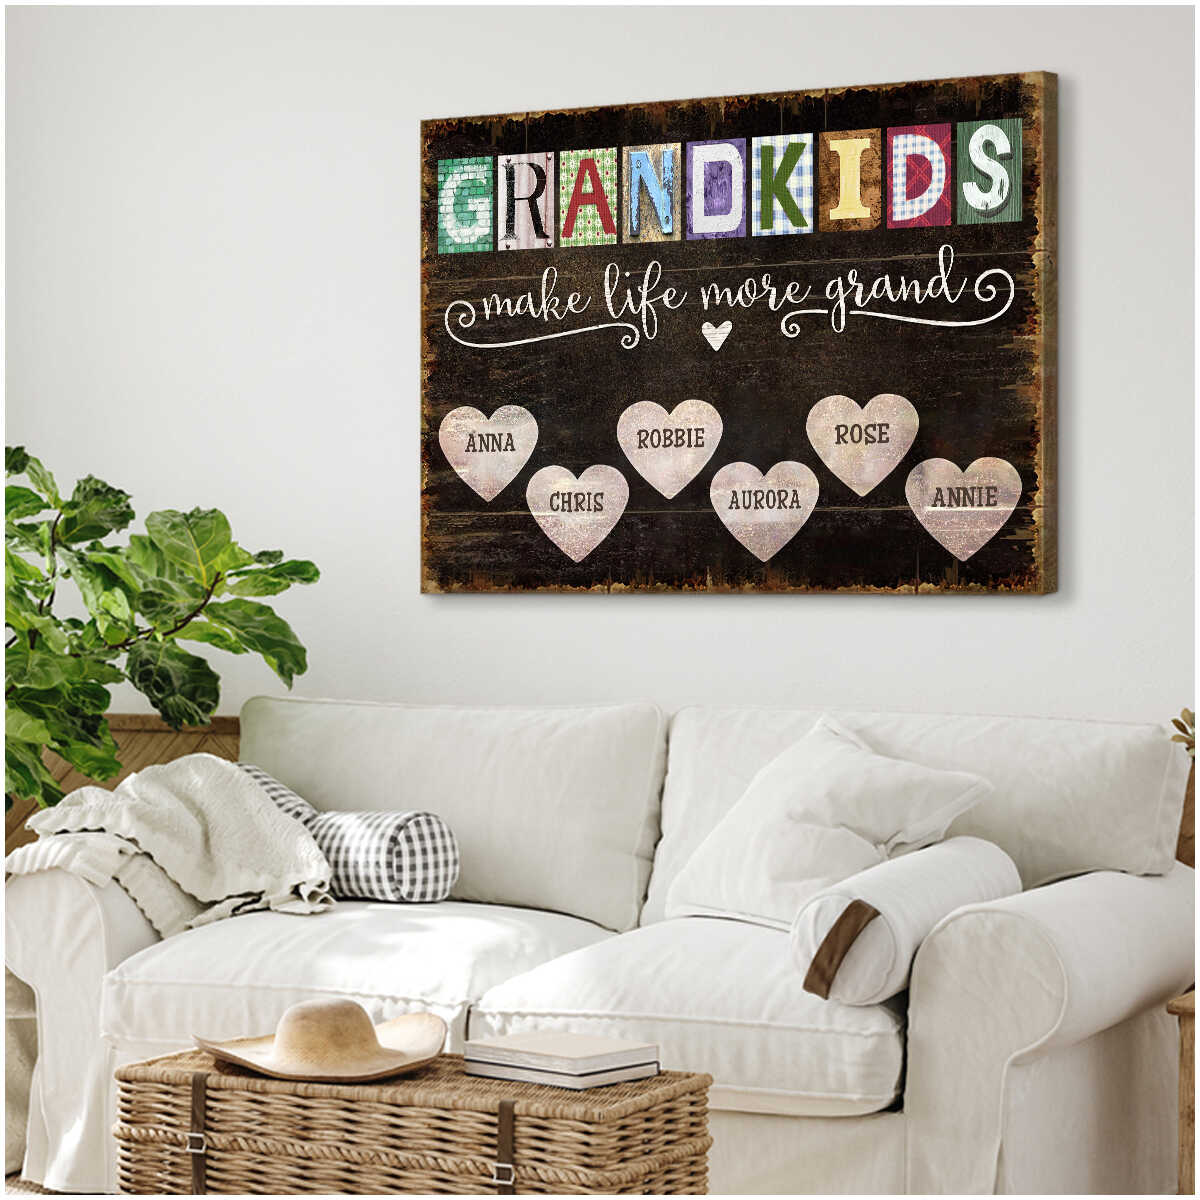 https://images.ohcanvas.com/ohcanvas_com/2022/04/22034821/uqiue-gift-idea-for-grandma-personalized-grandmas-house-wall-decor-canvas-1.jpg